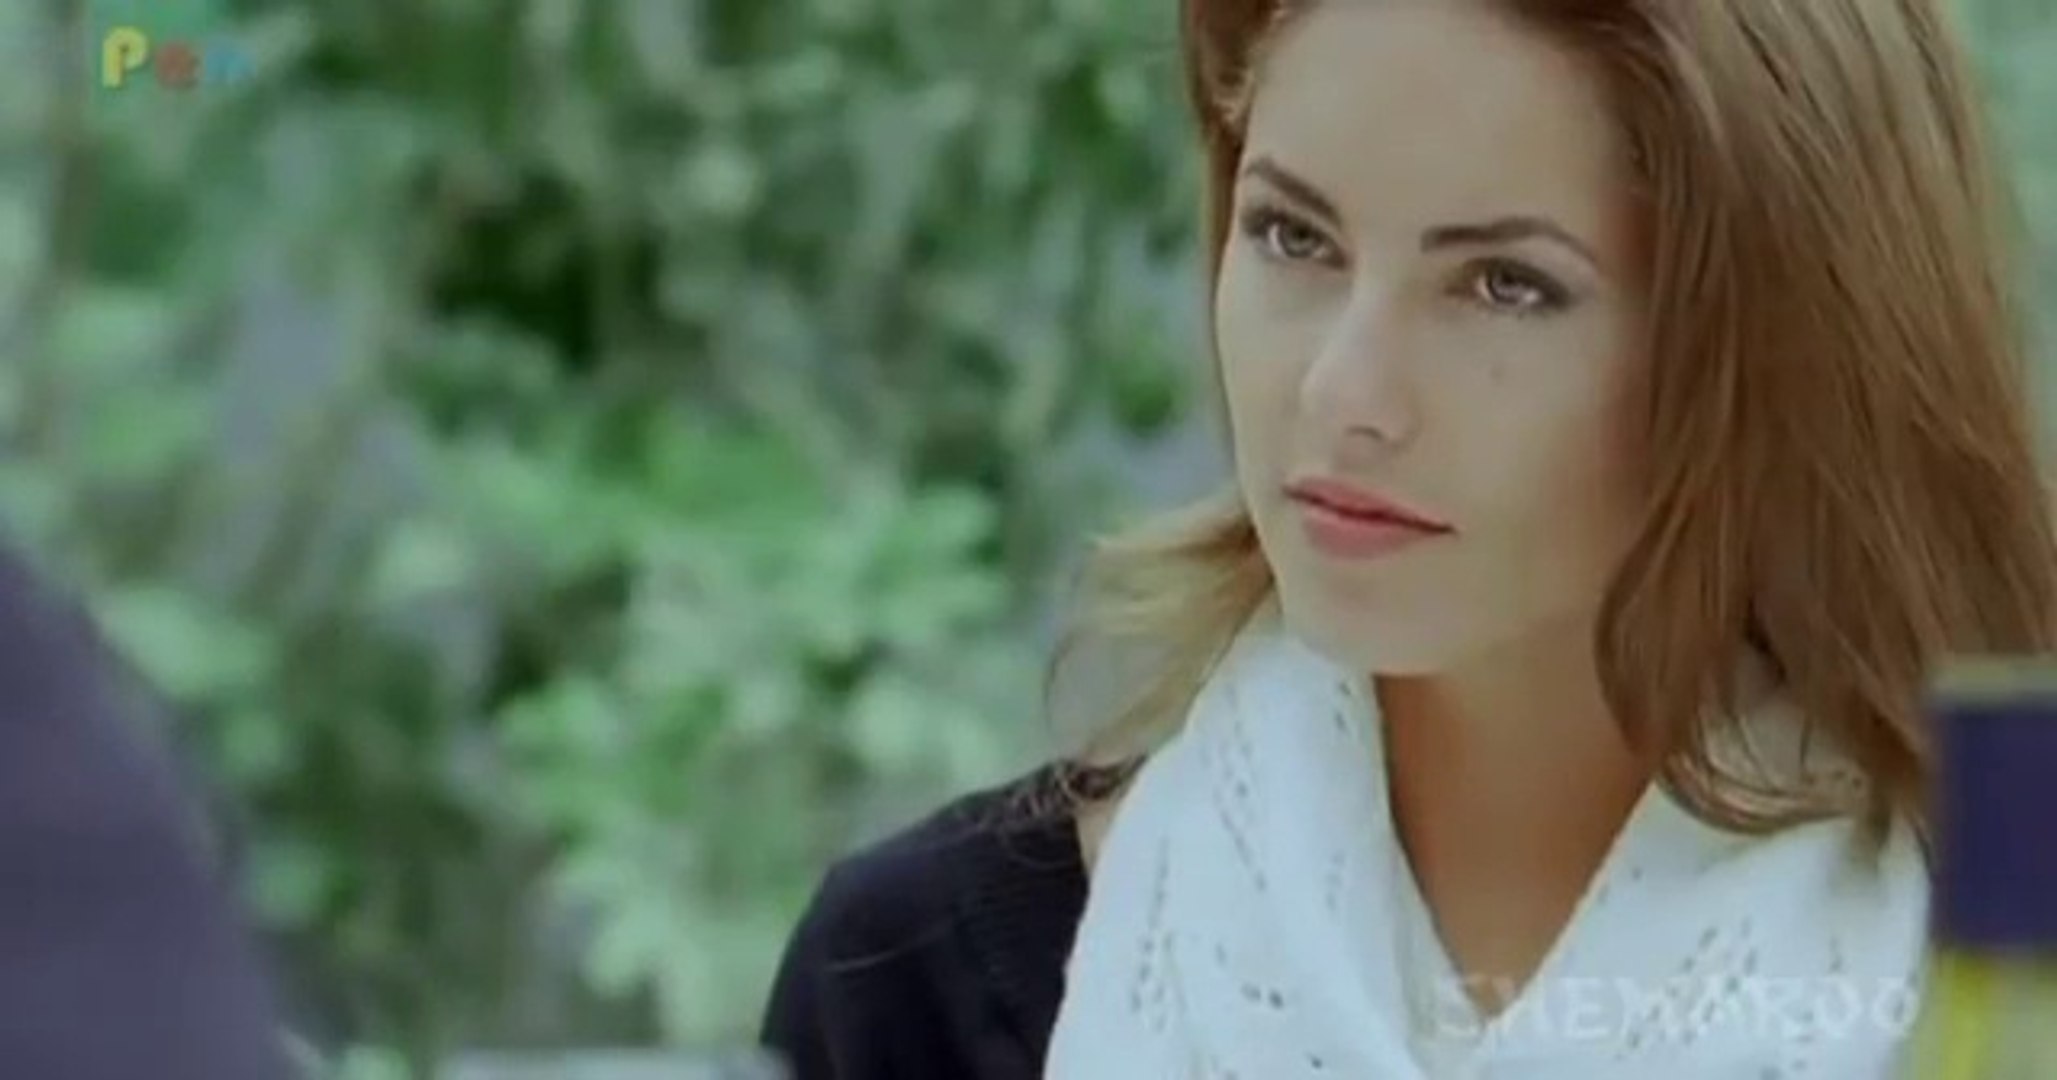 Spanish Beauty - A Beautiful Wife - Barbara mori - Part 1 - video ...